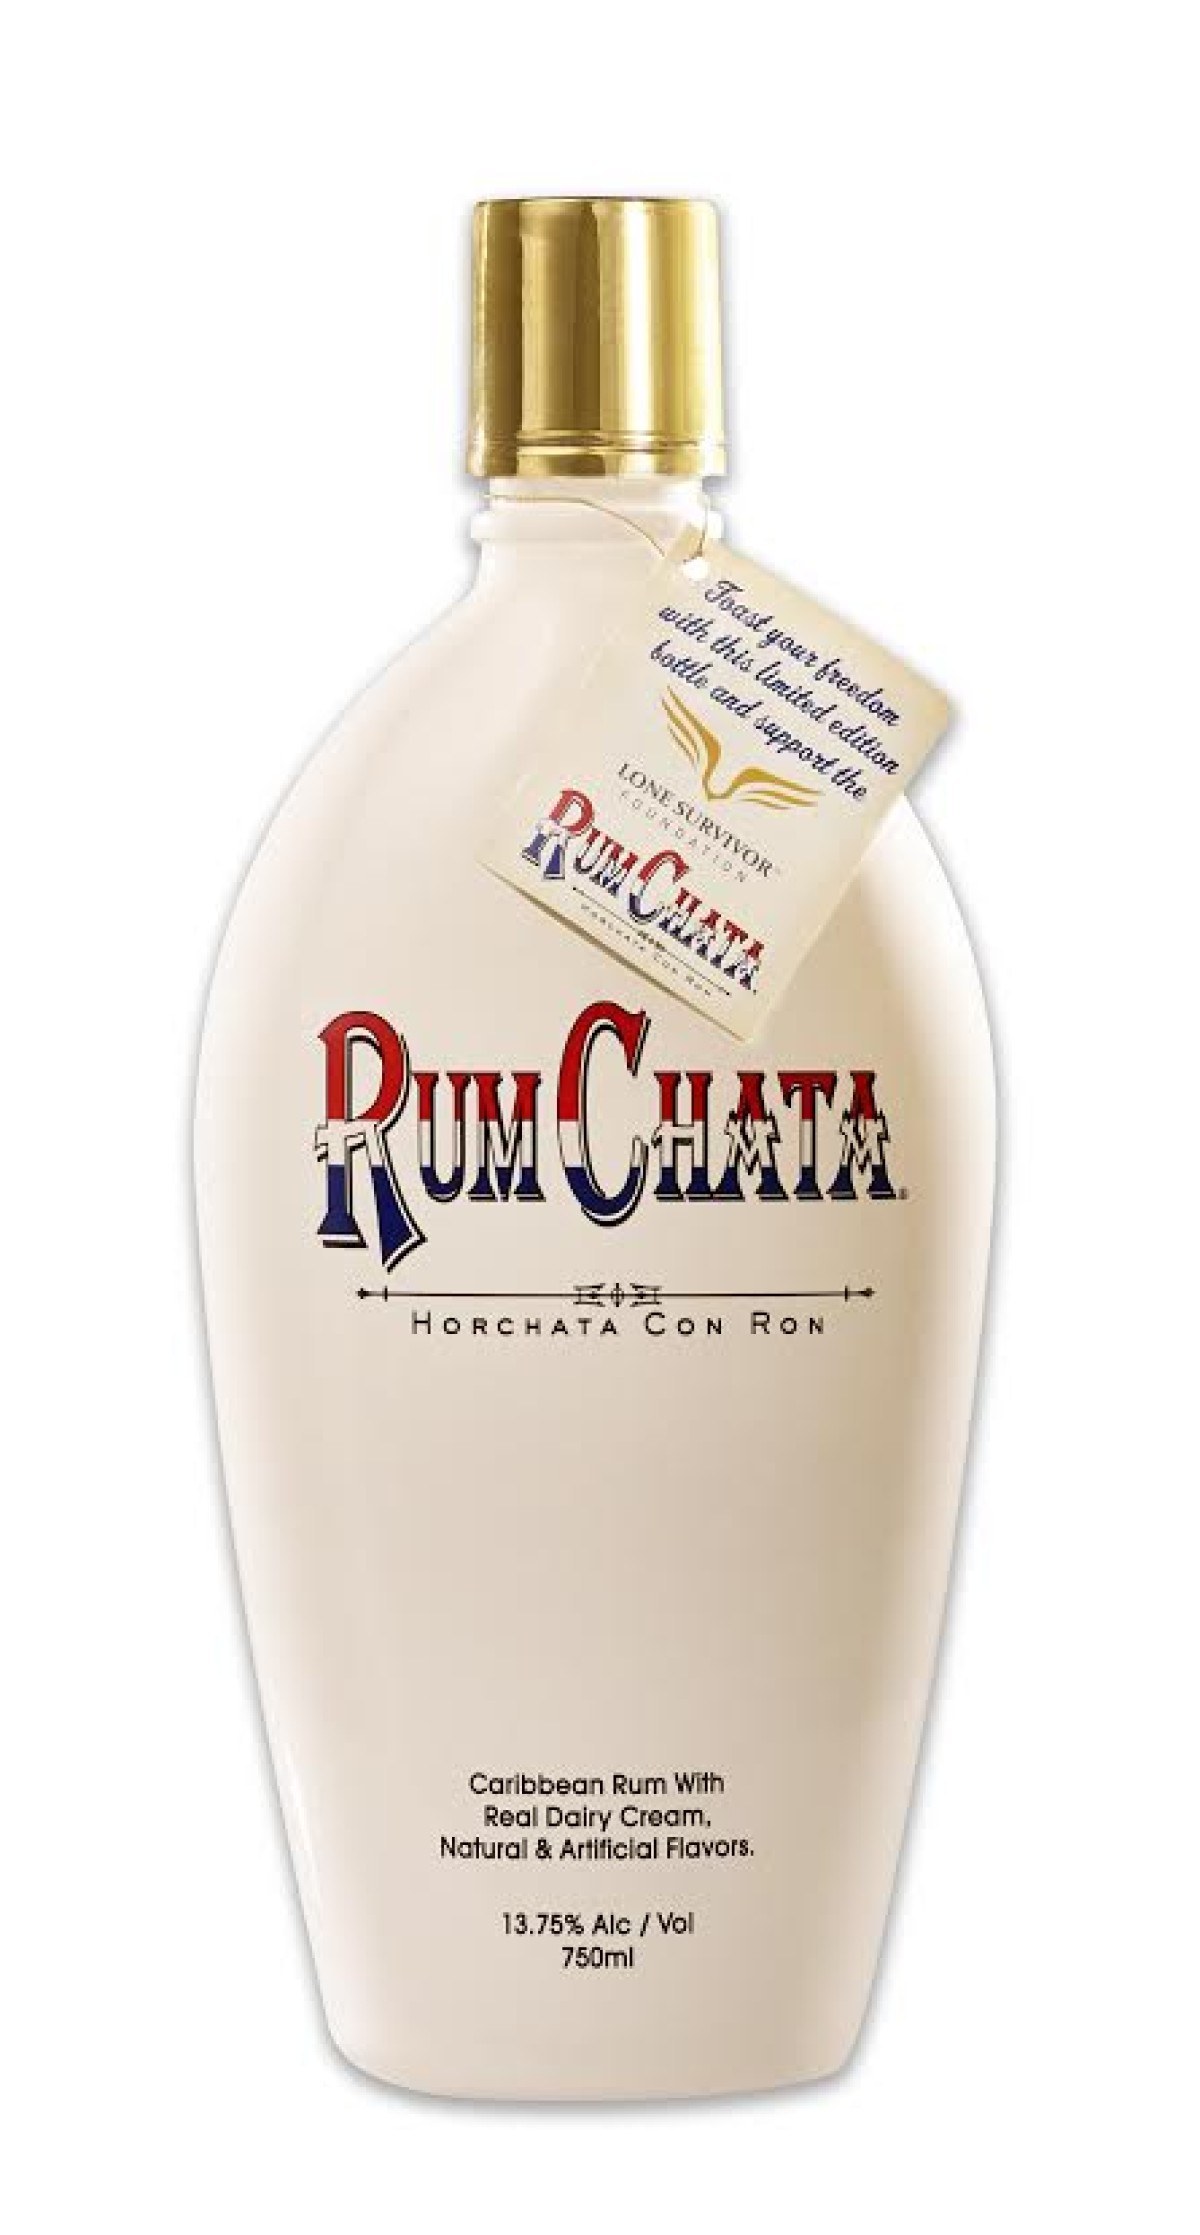 https://www.fb101.com/wp-content/uploads/2015/05/Rum-Chata-Freedom-Bottle-1200x2235.jpg